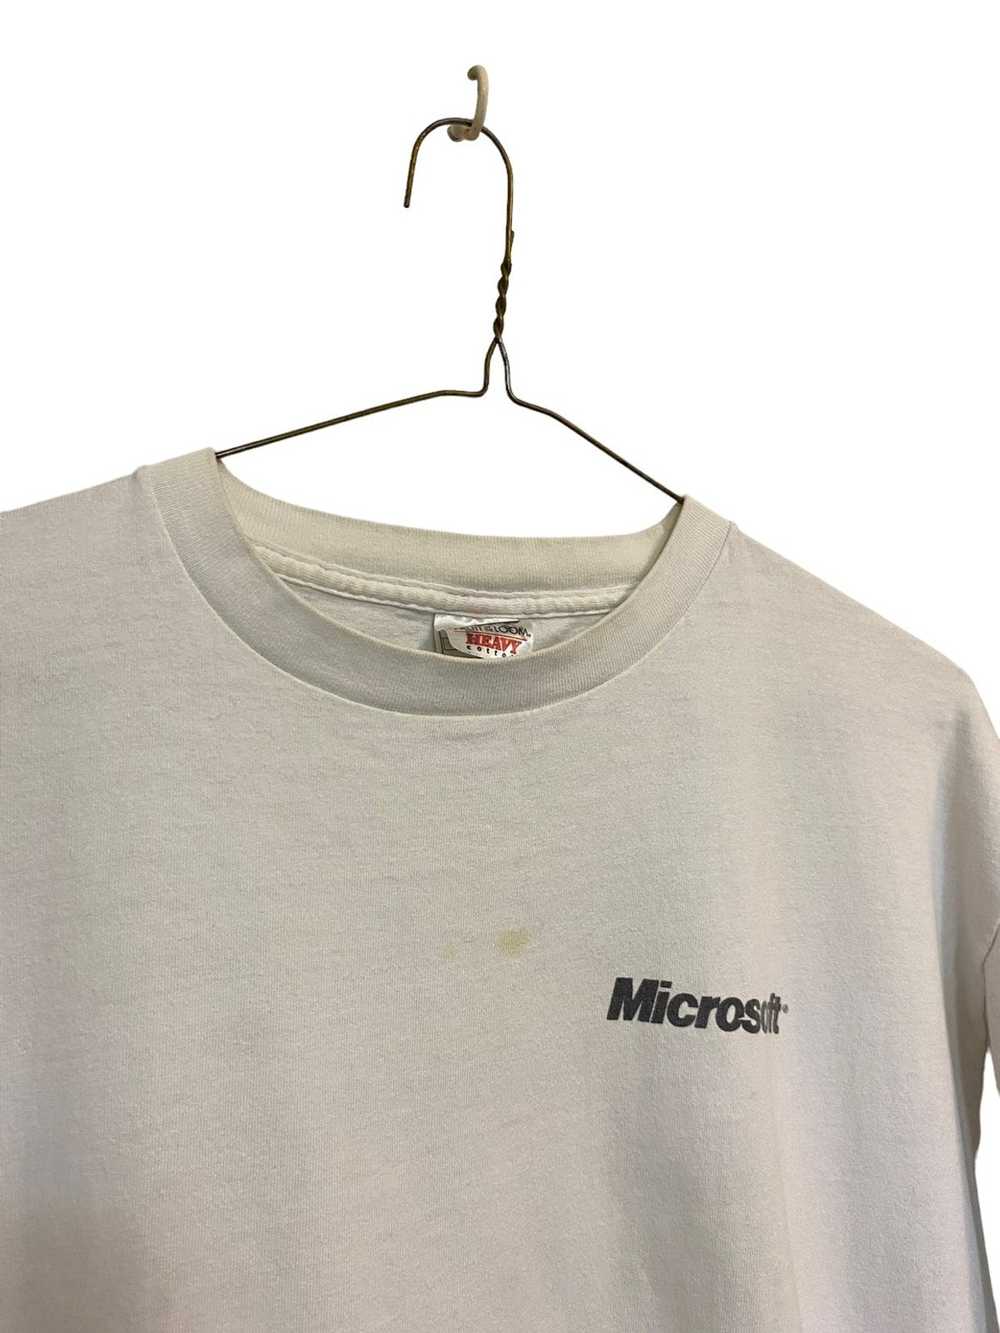 Microsoft × Vintage Vintage Microsoft Windows Ser… - image 5